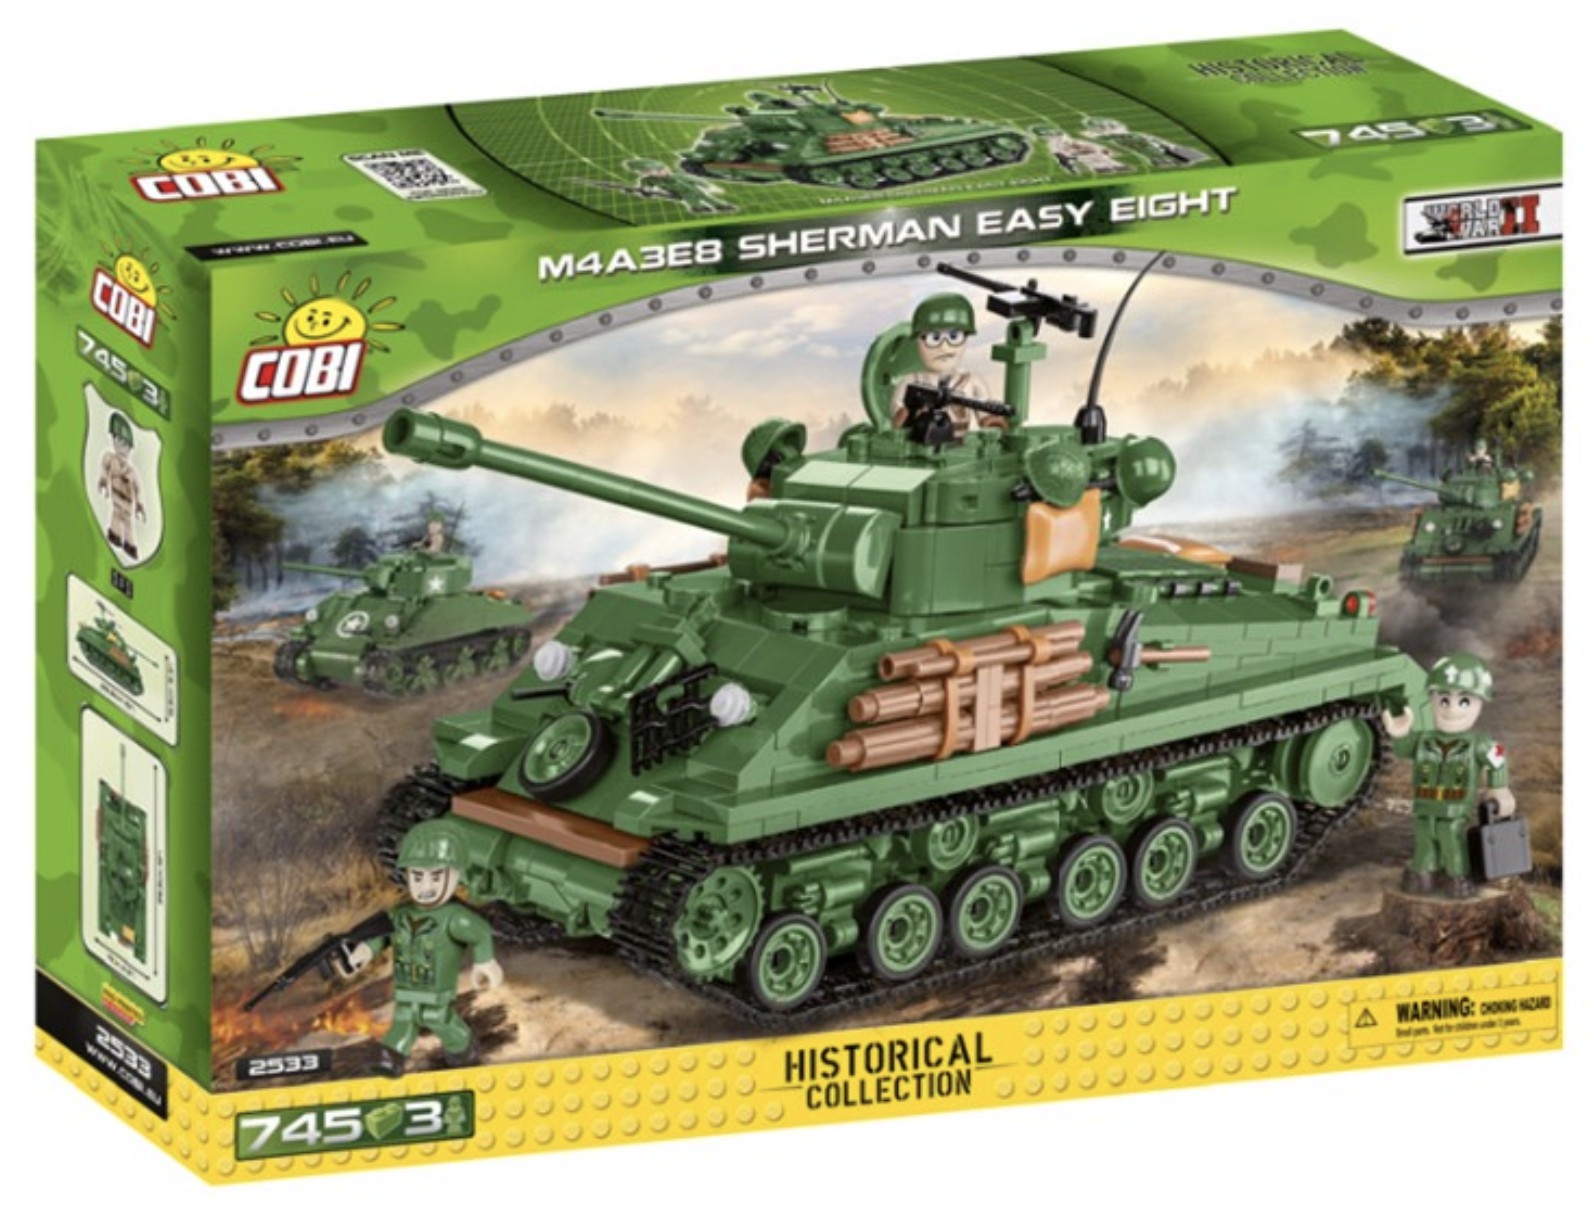 2533 - M4A3E8 Sherman Easy Eight